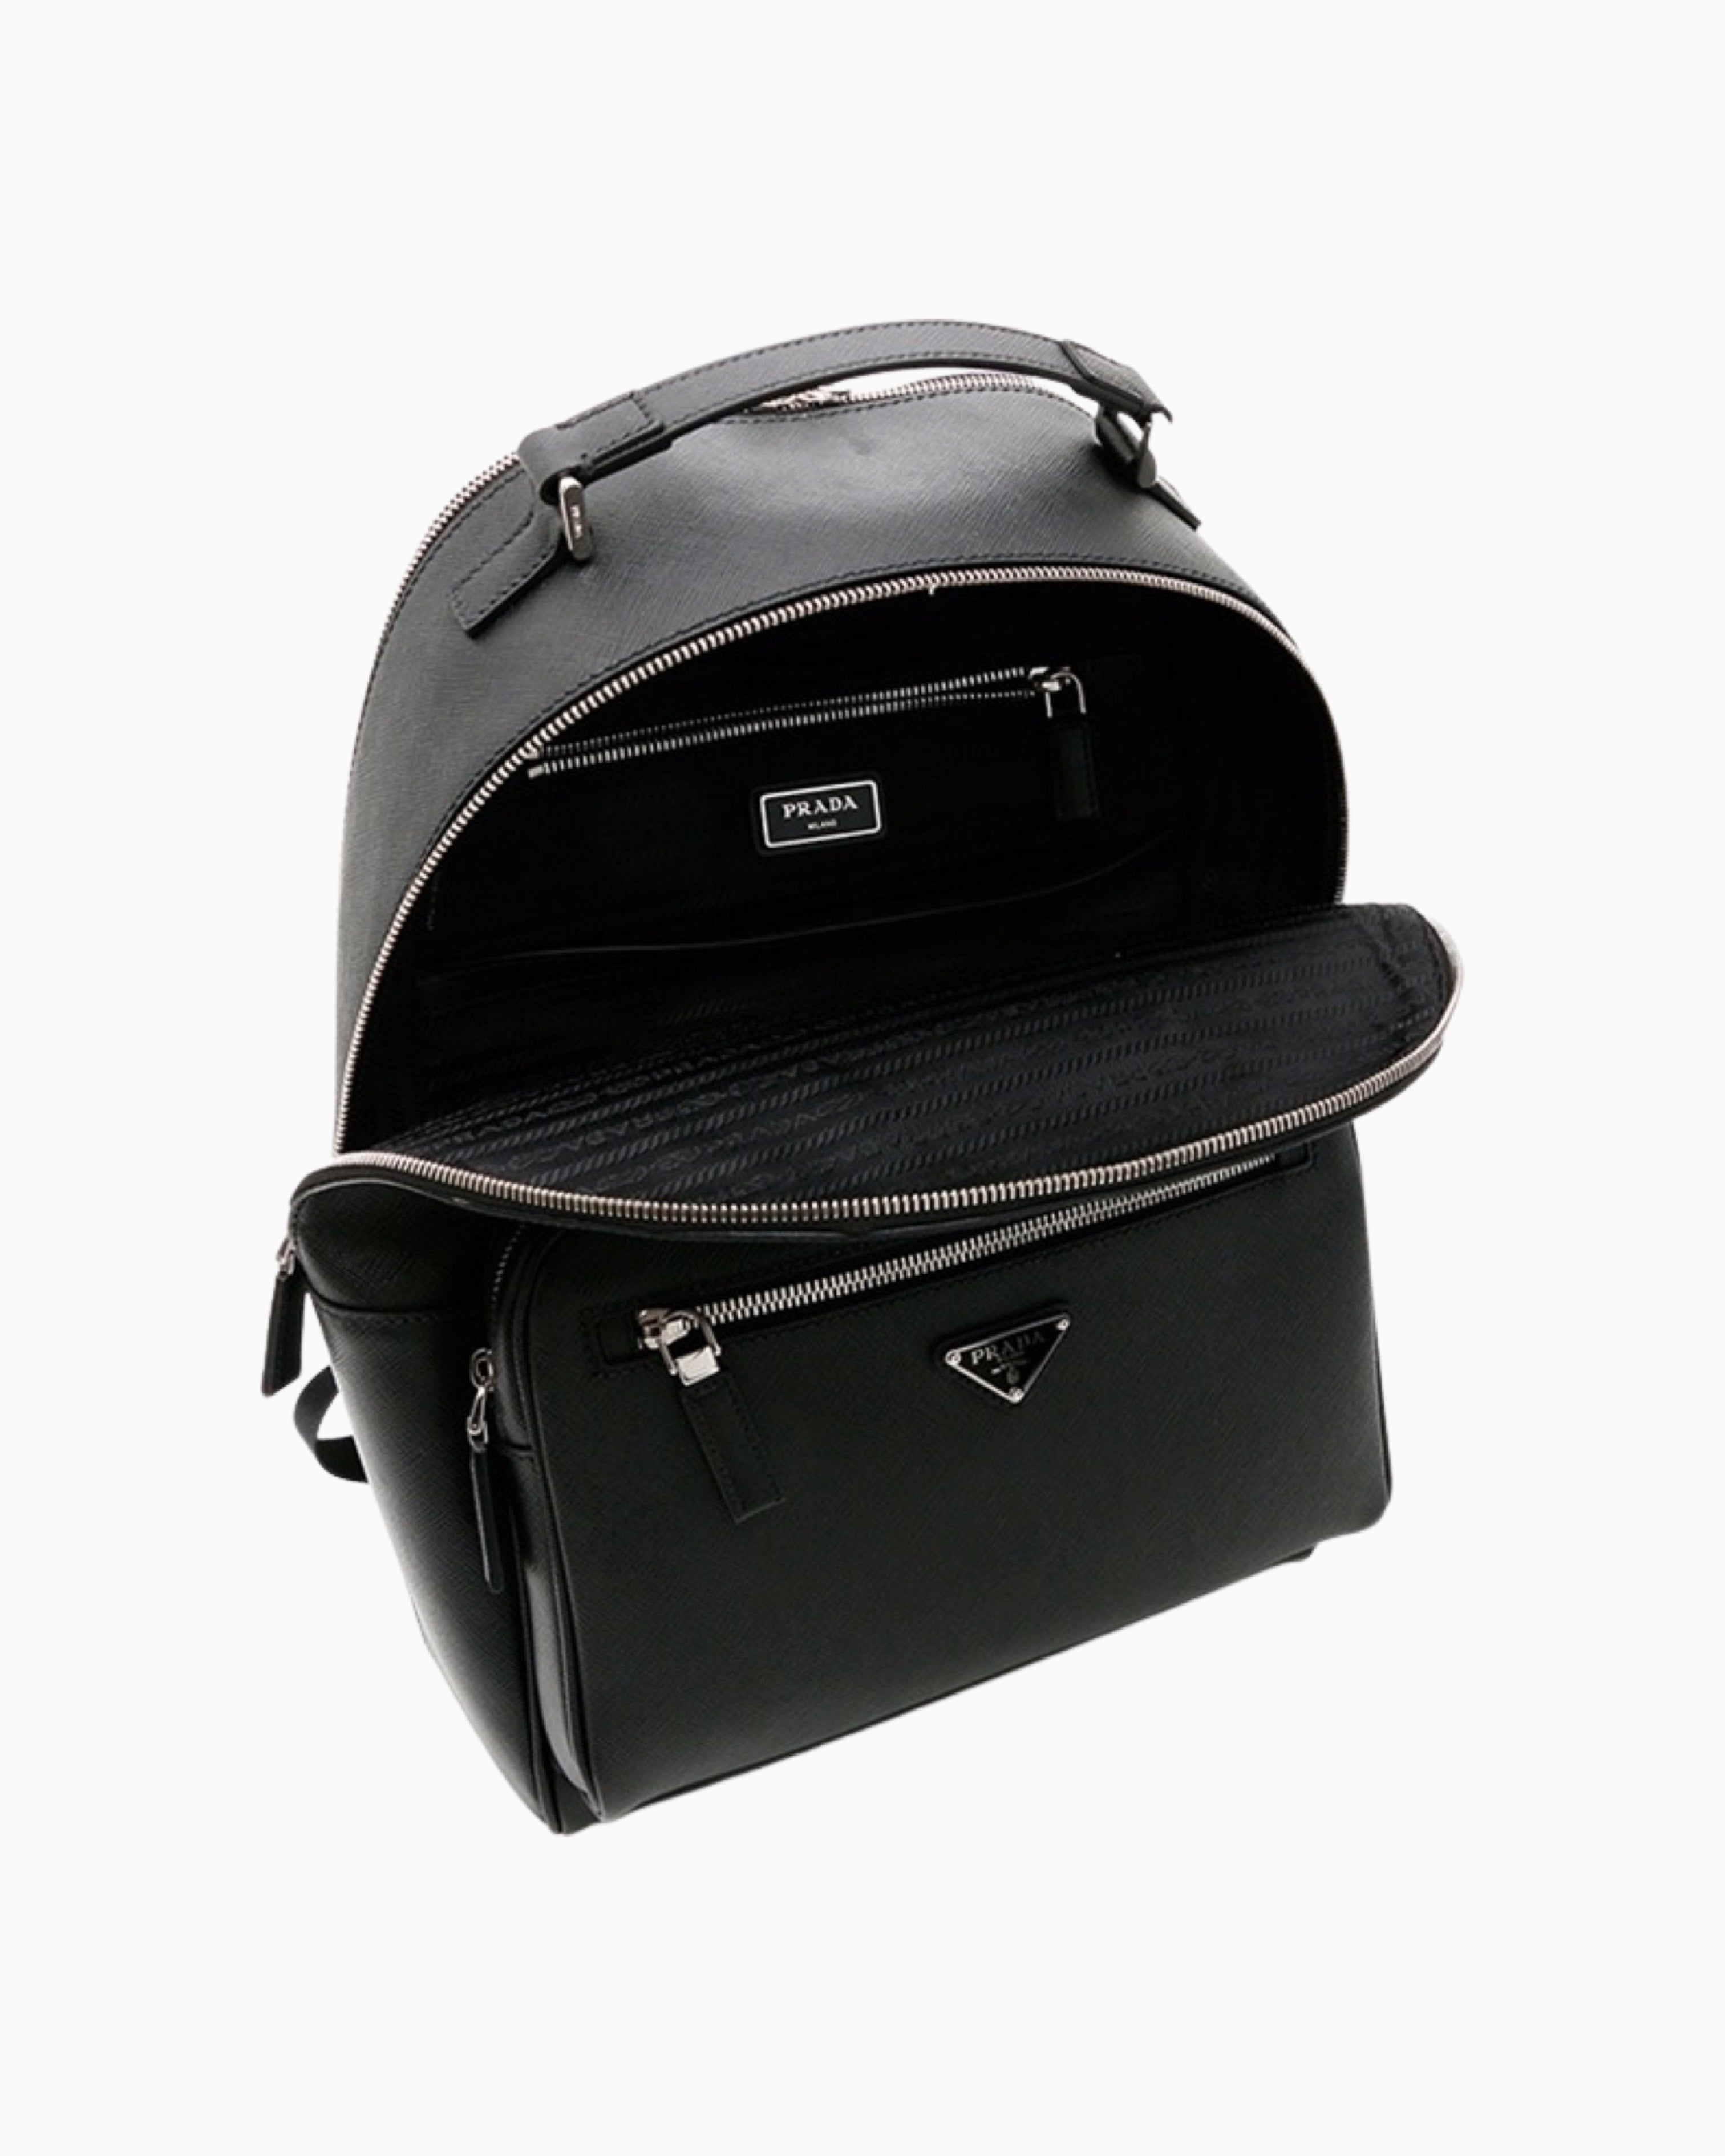 Prada Men's Saffiano Leather and Nylon Backpack